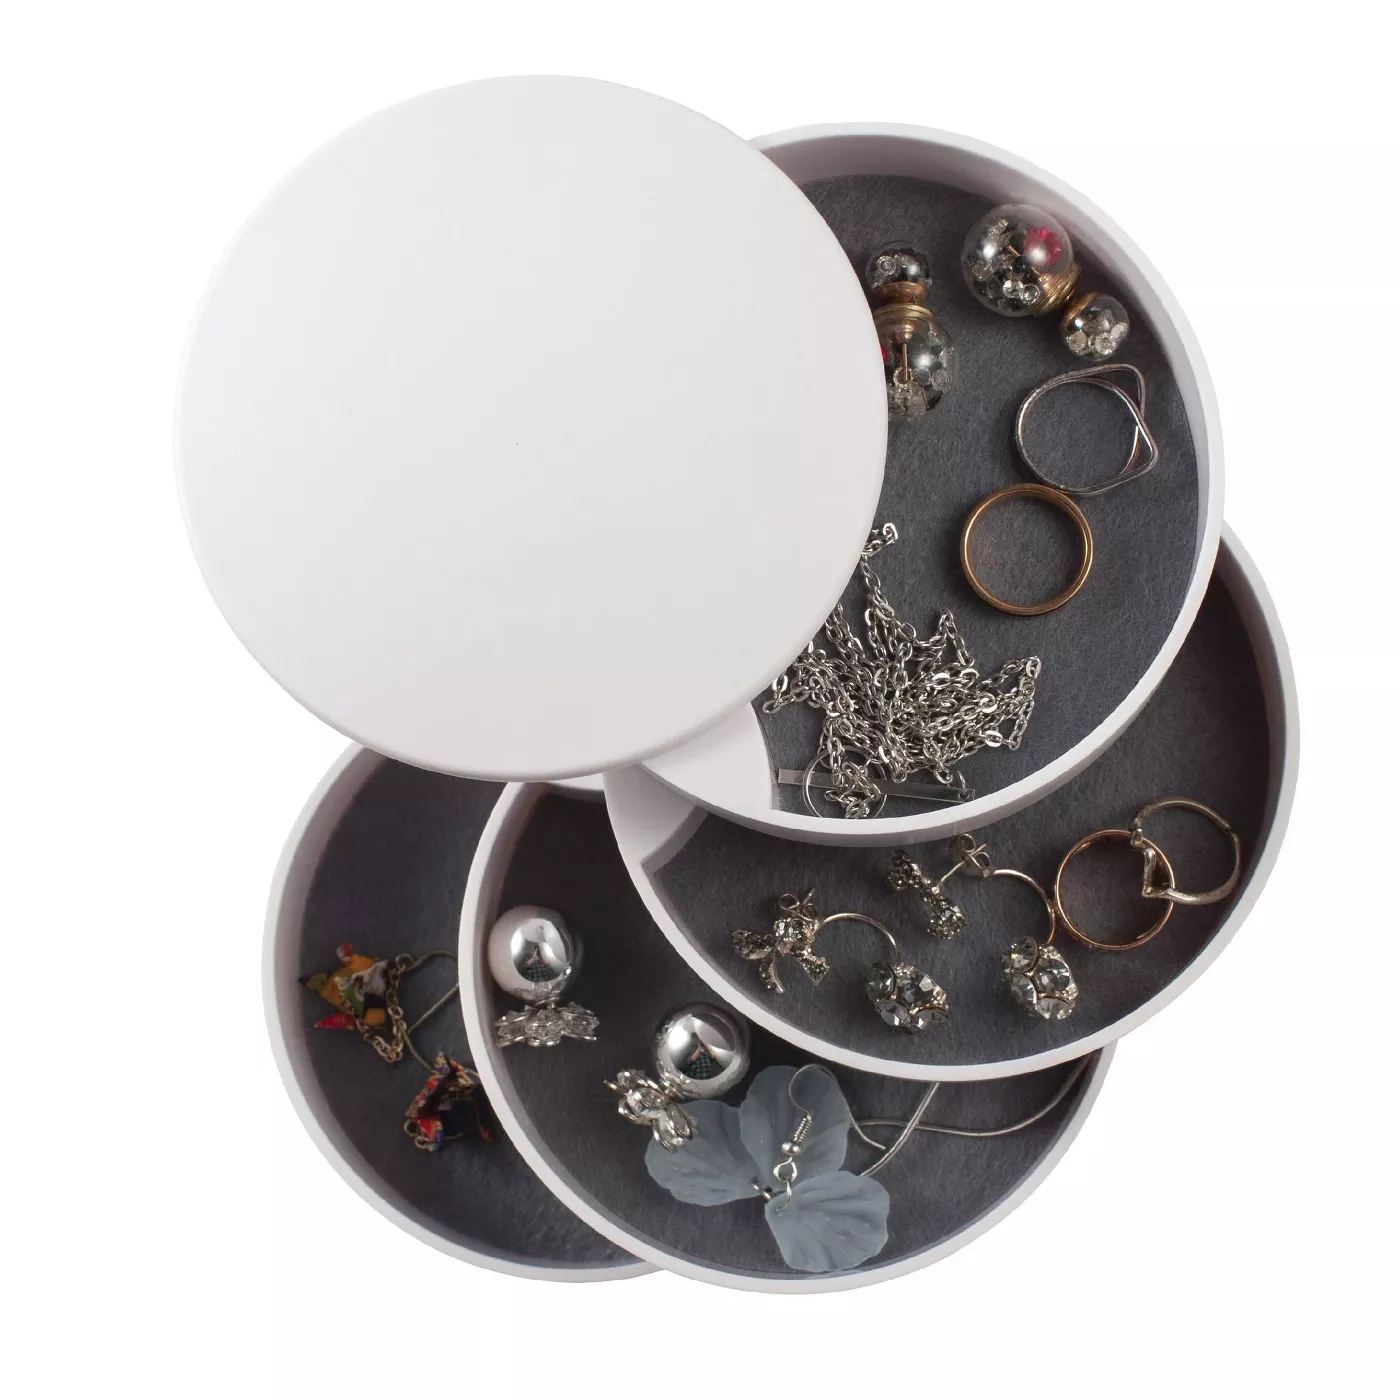 Four Layer Jewelry Storage Organizer, 360° Rotating Tiered Jewelry Trinket Tray at Target.